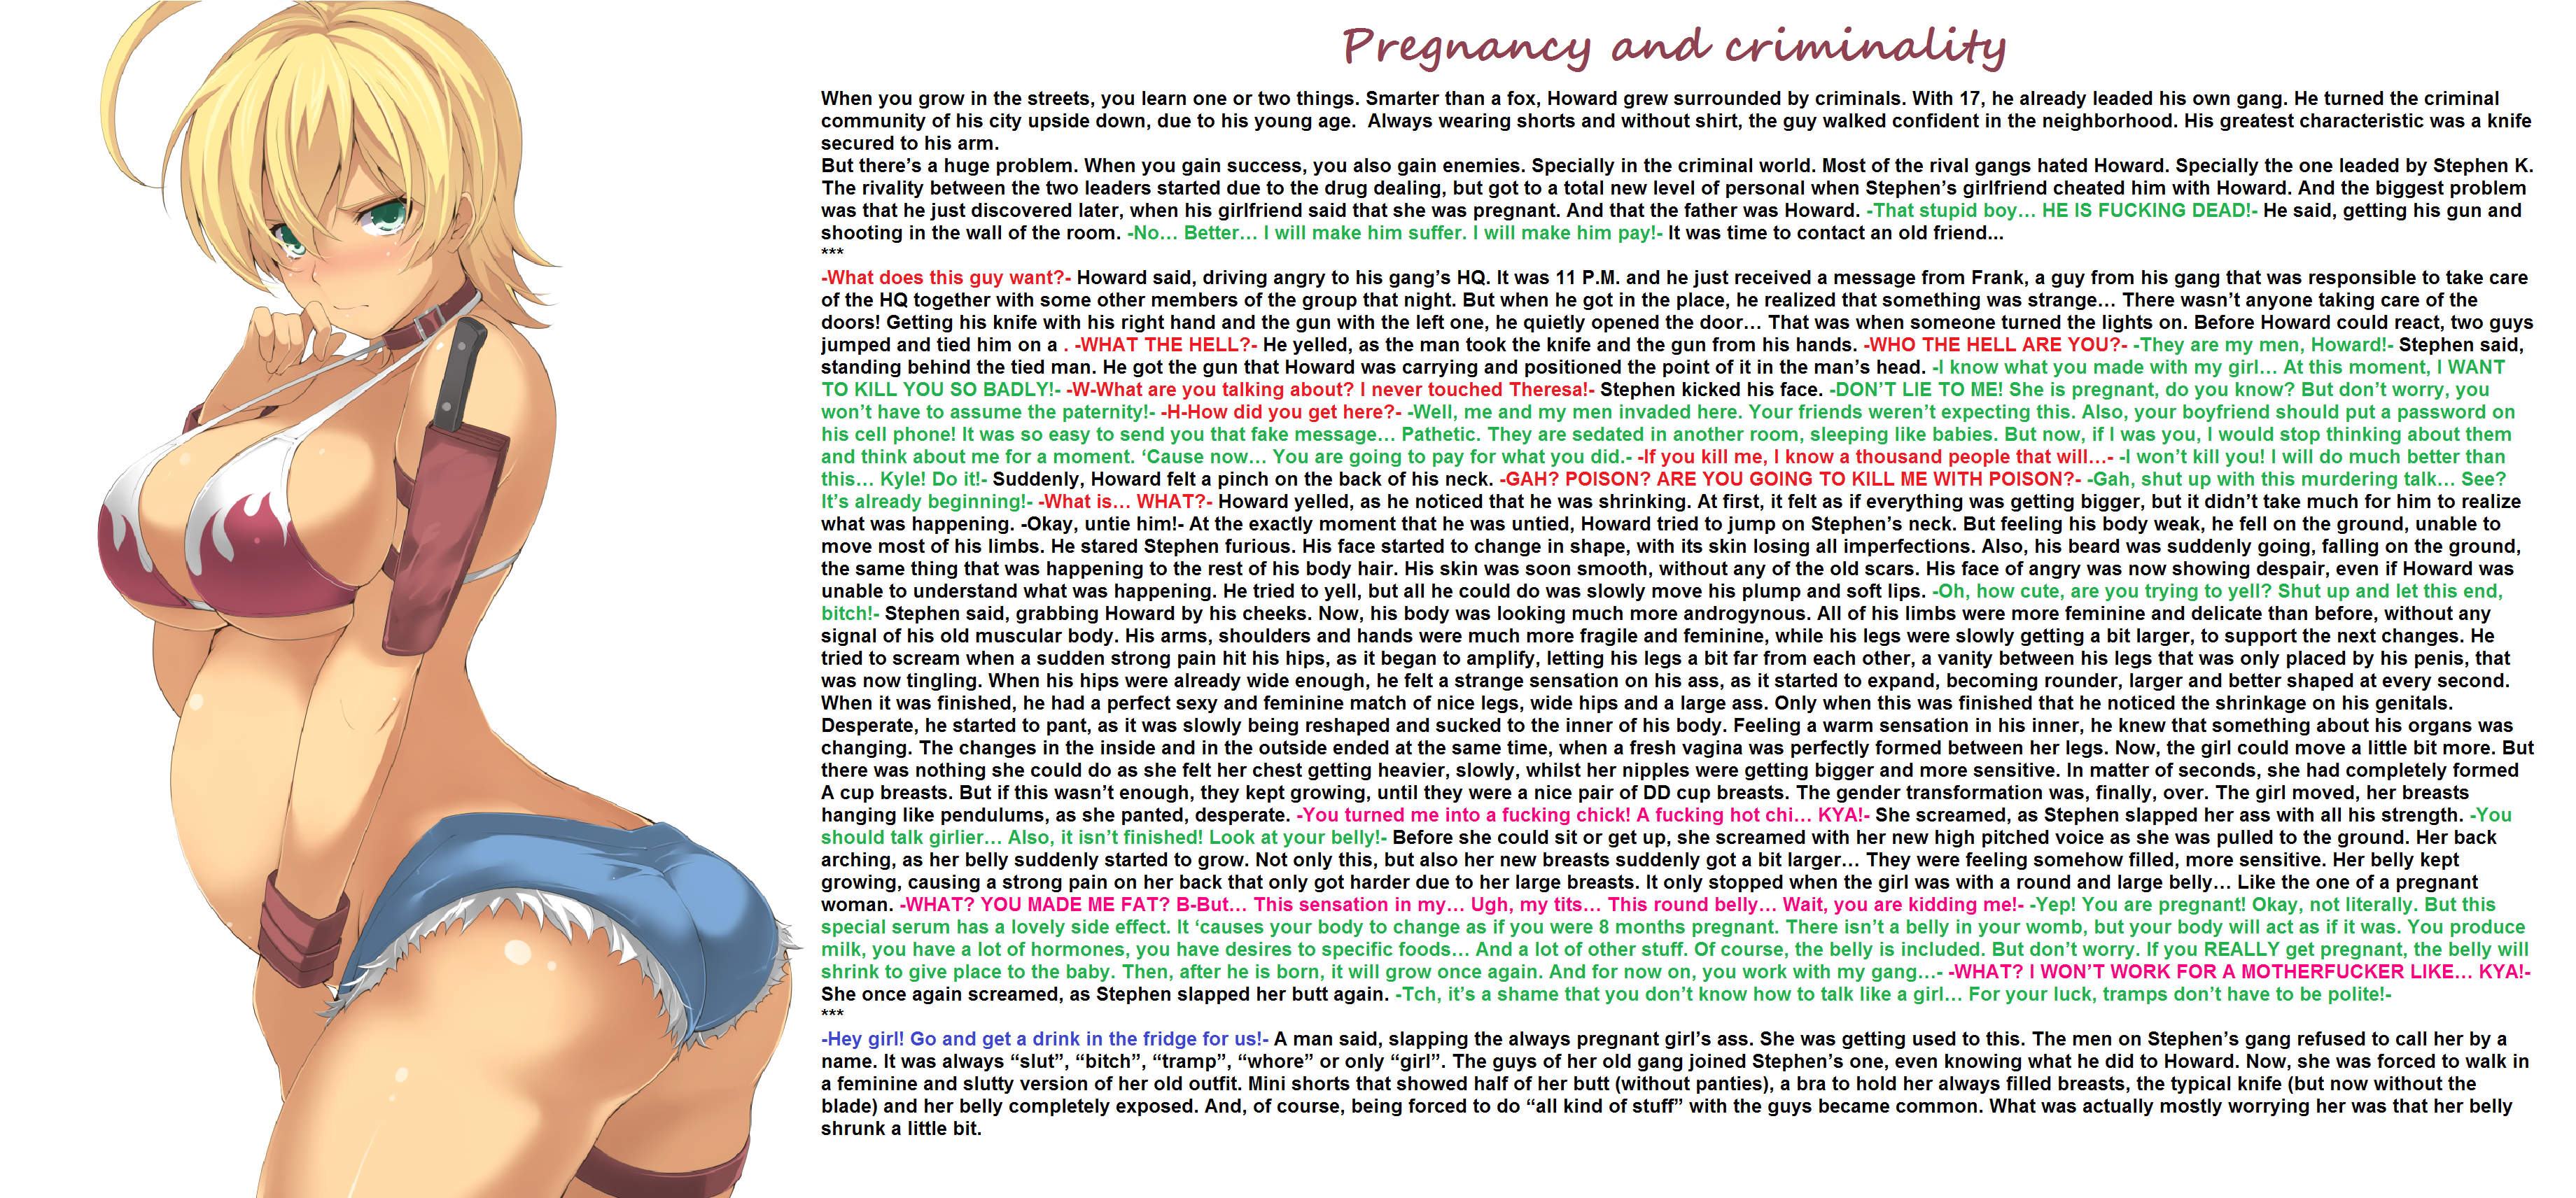 TG Caption - Pregnancy and criminality.